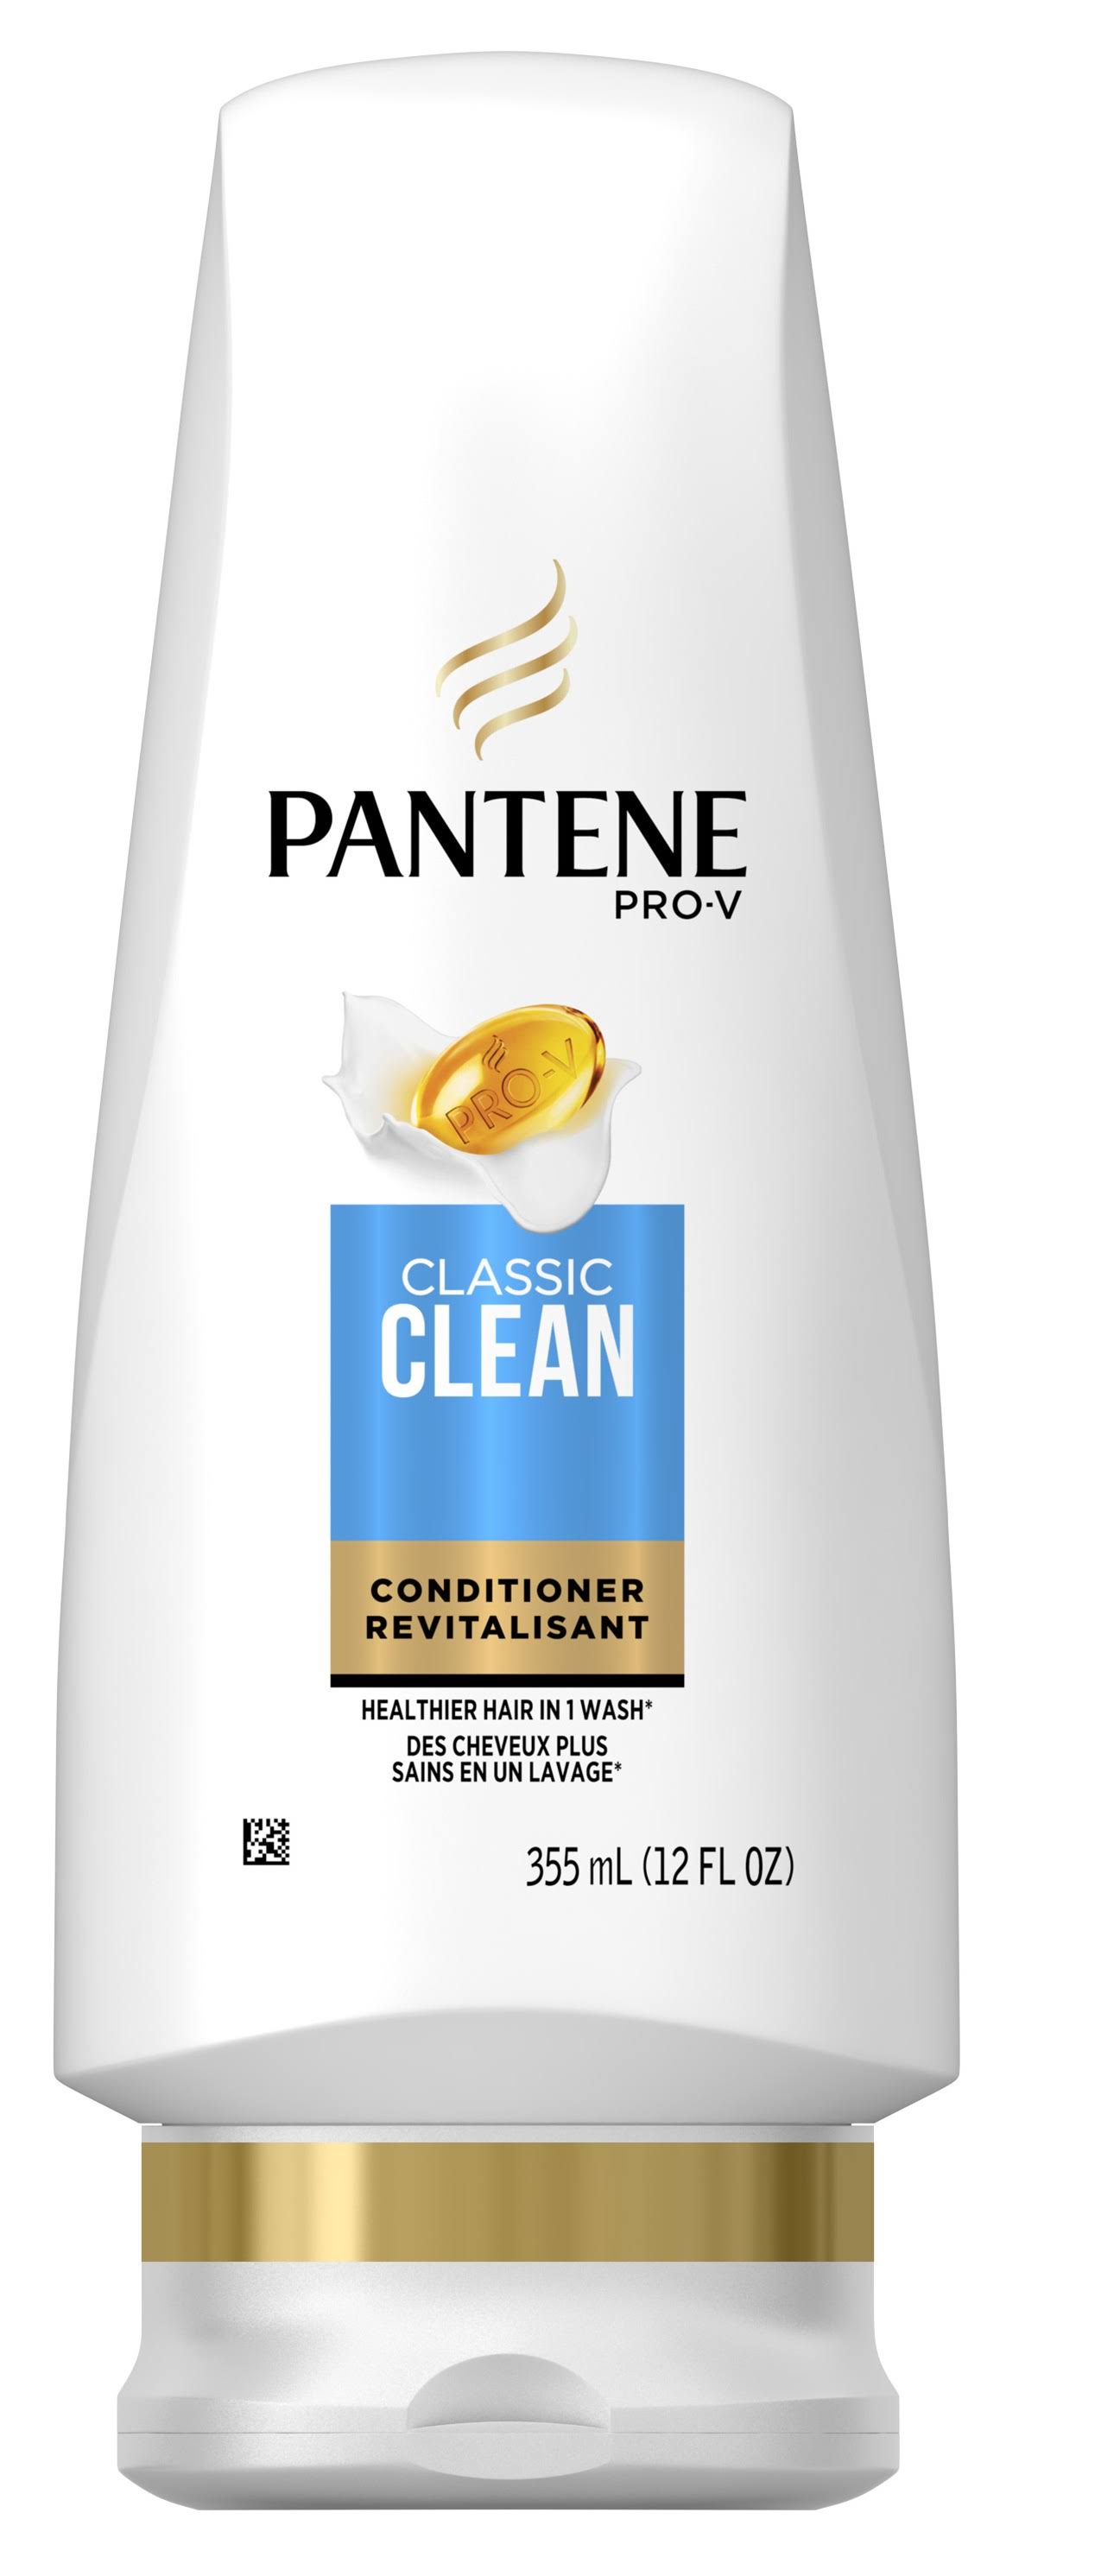 Pantene Pro-V Dream Care Classic Clean Conditioner 12.0 Fl. Oz. Bottle